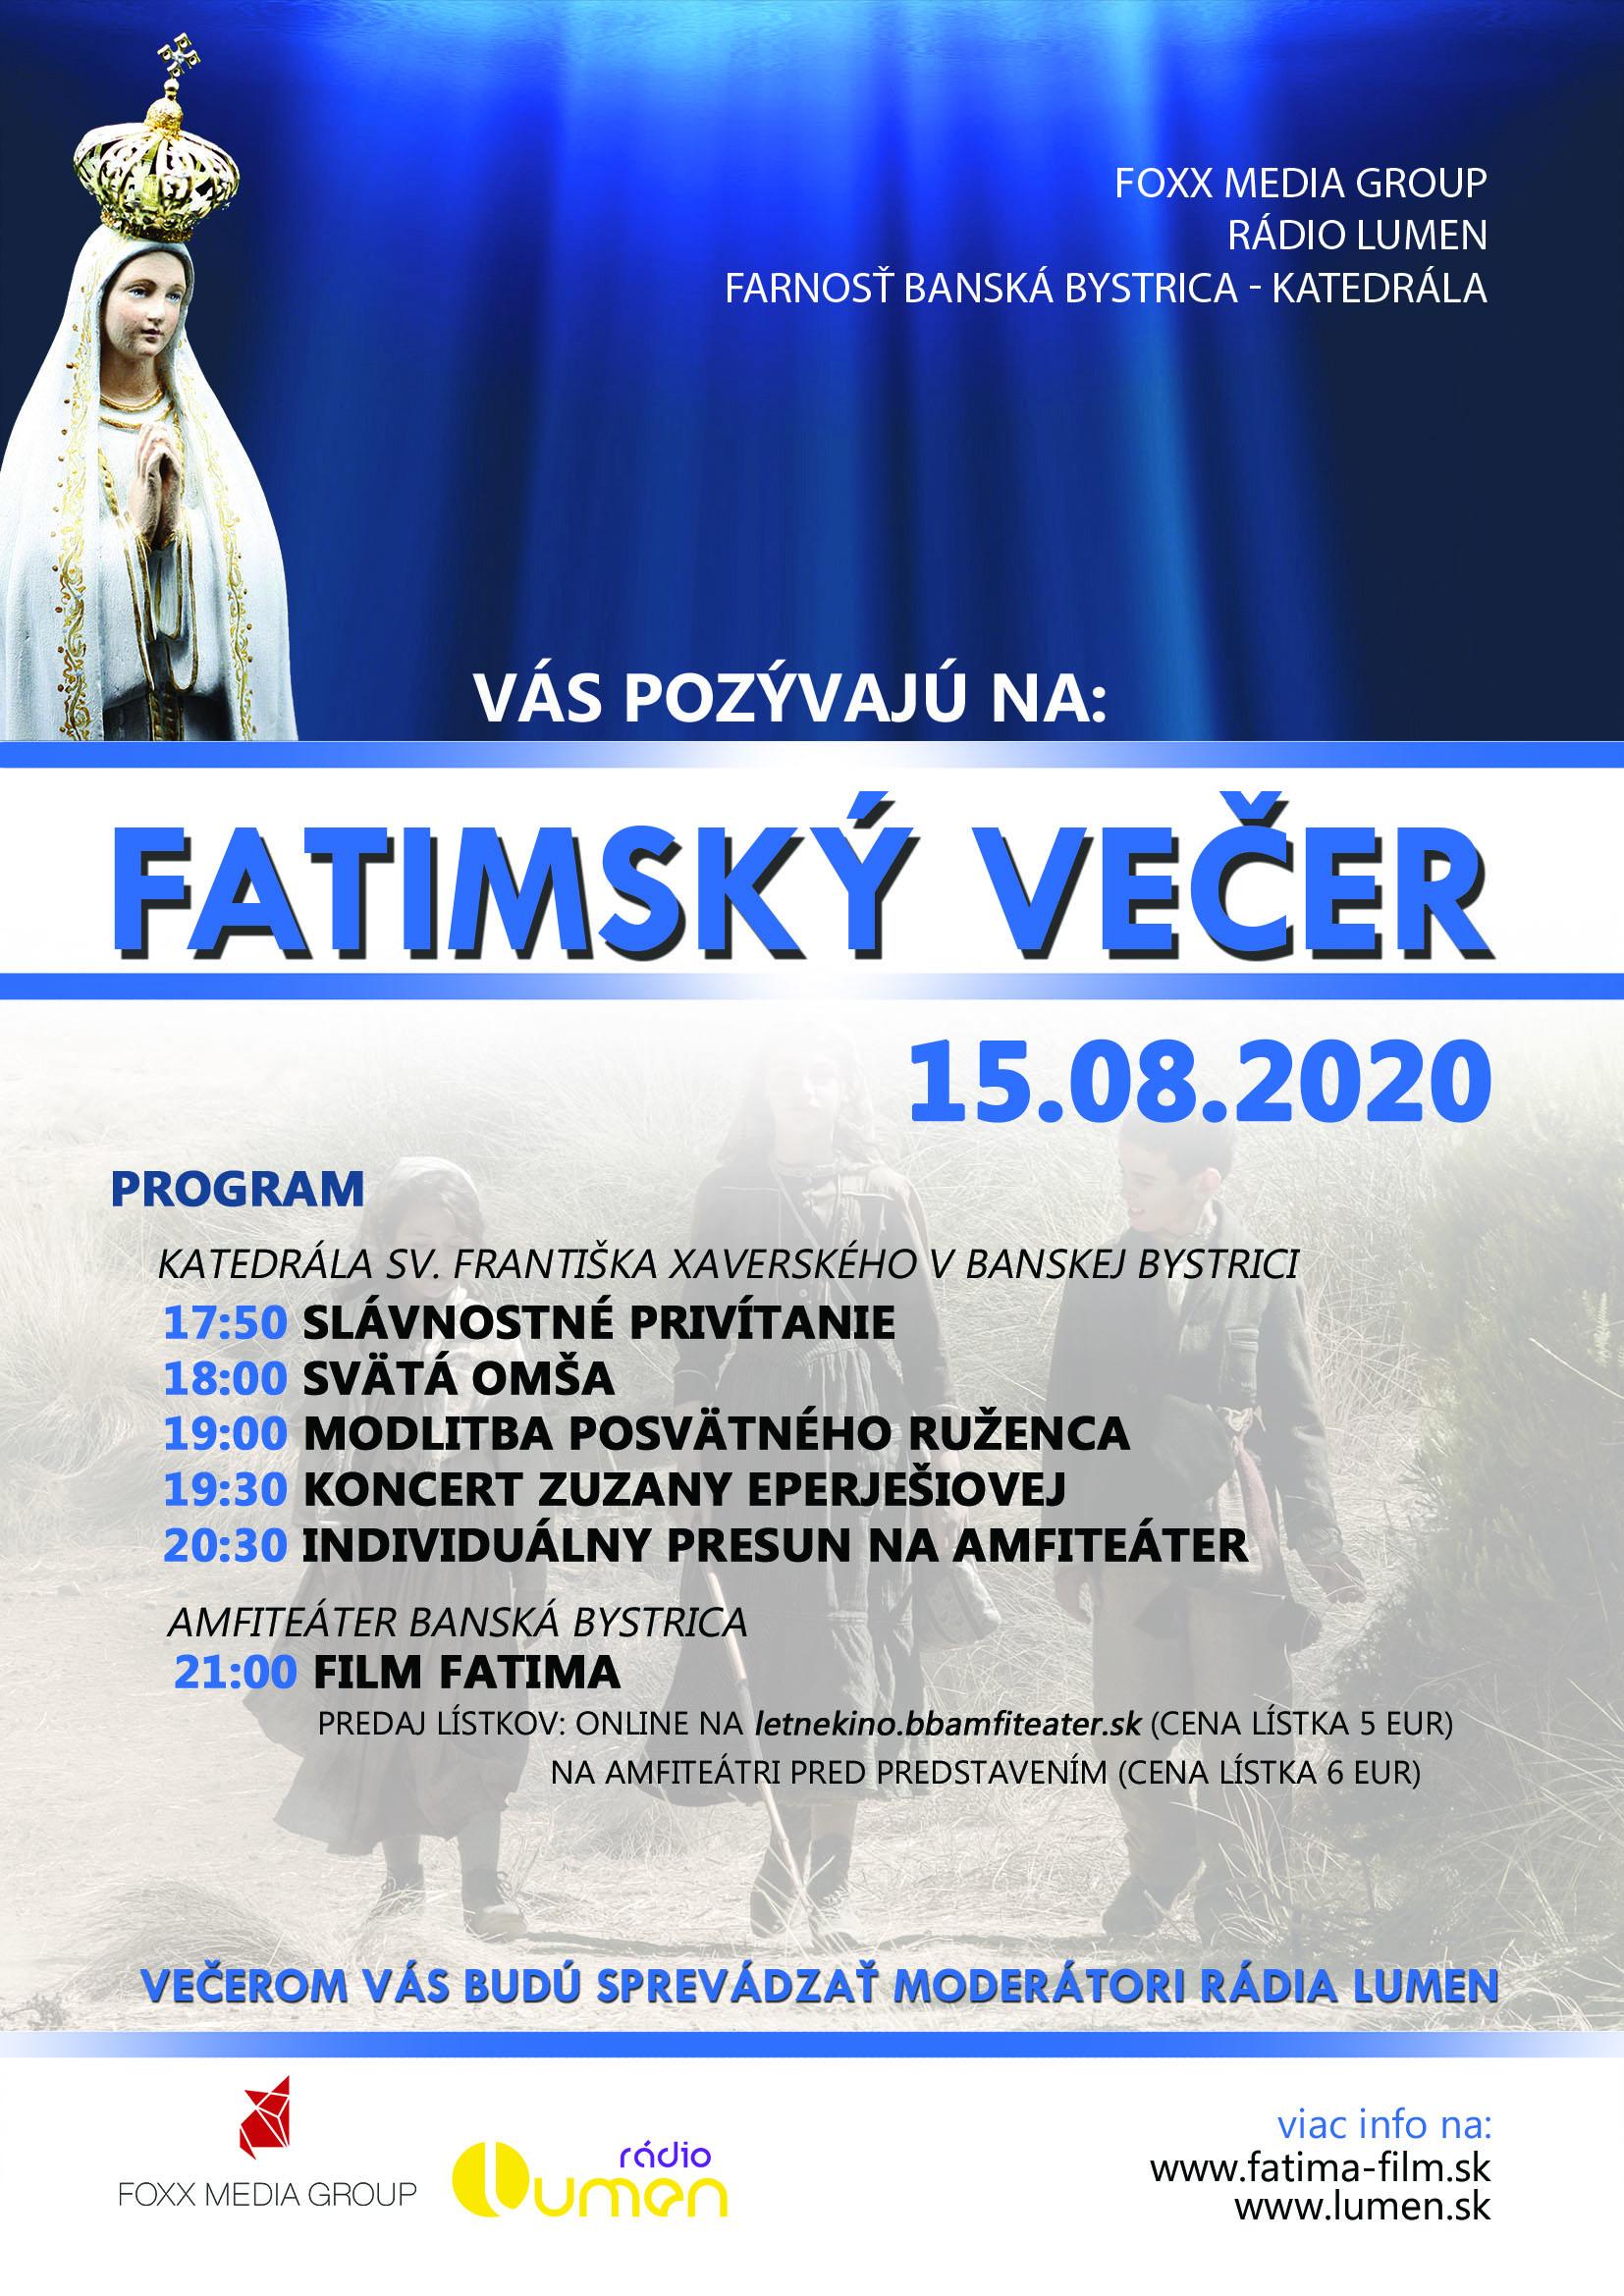 Banska Bystrica, Fatimsky vecer